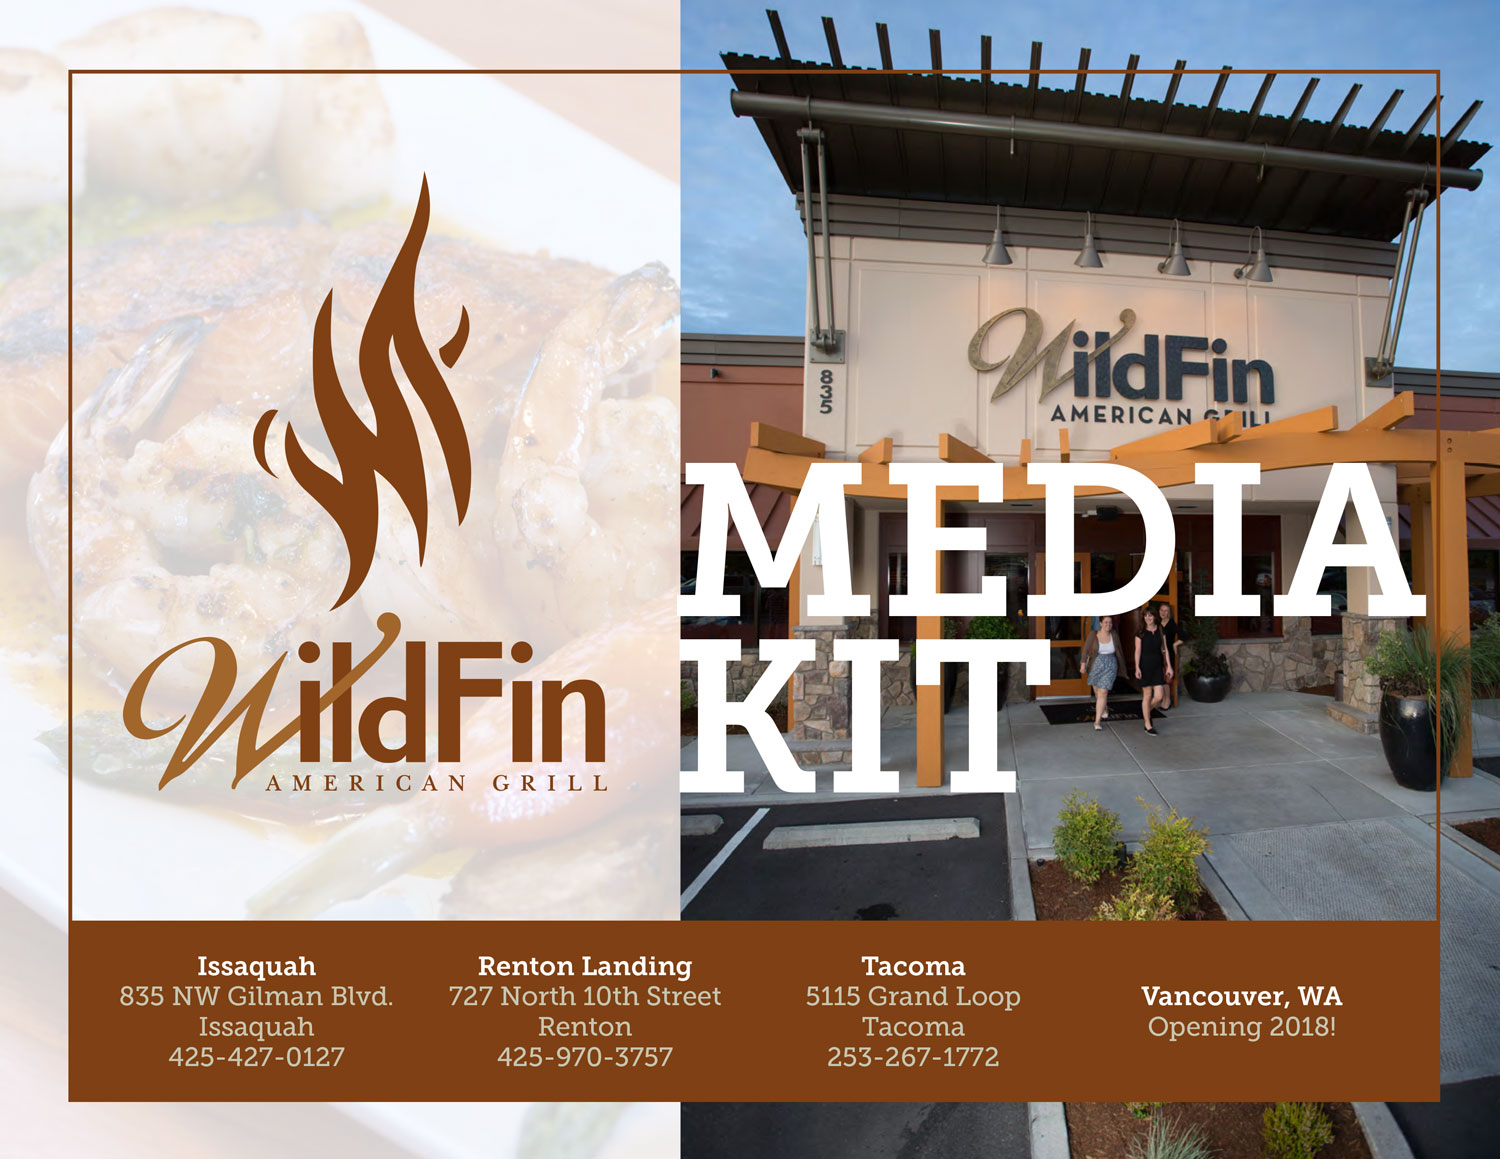 WildFin American Grill Press Kit designed by Fingerprint Marketing